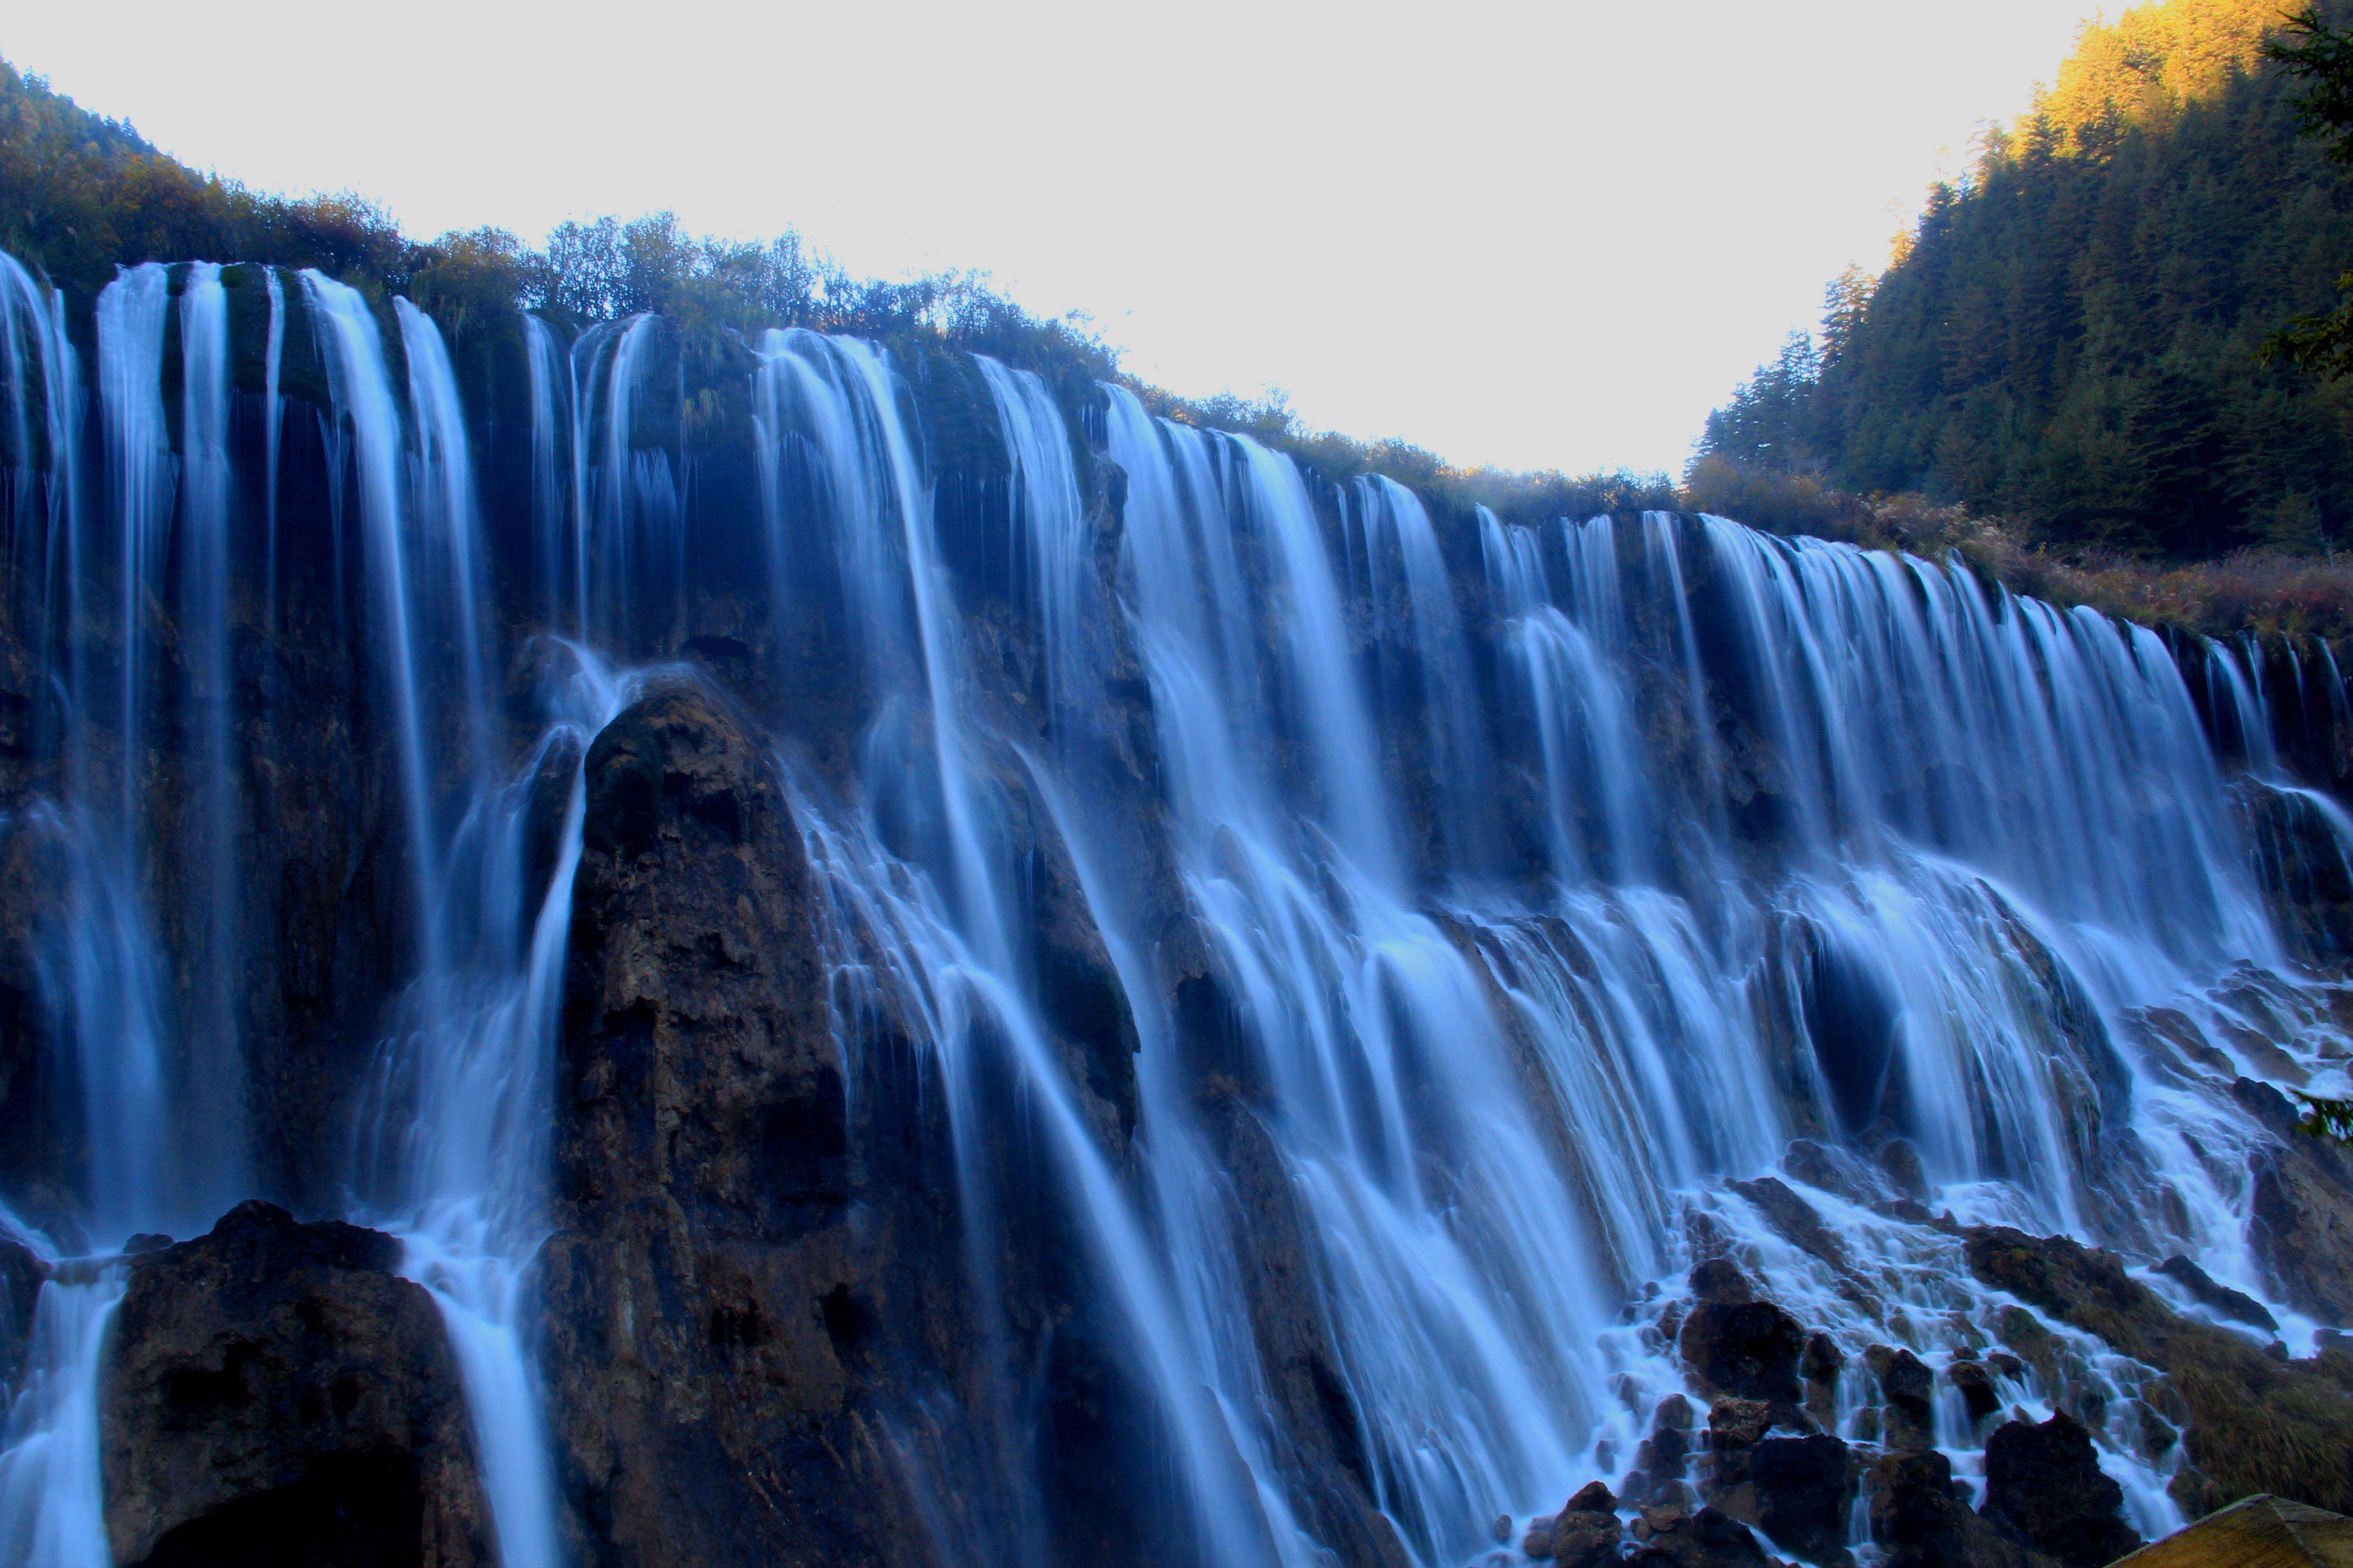 Nuorilang_Waterfall_1.jpg